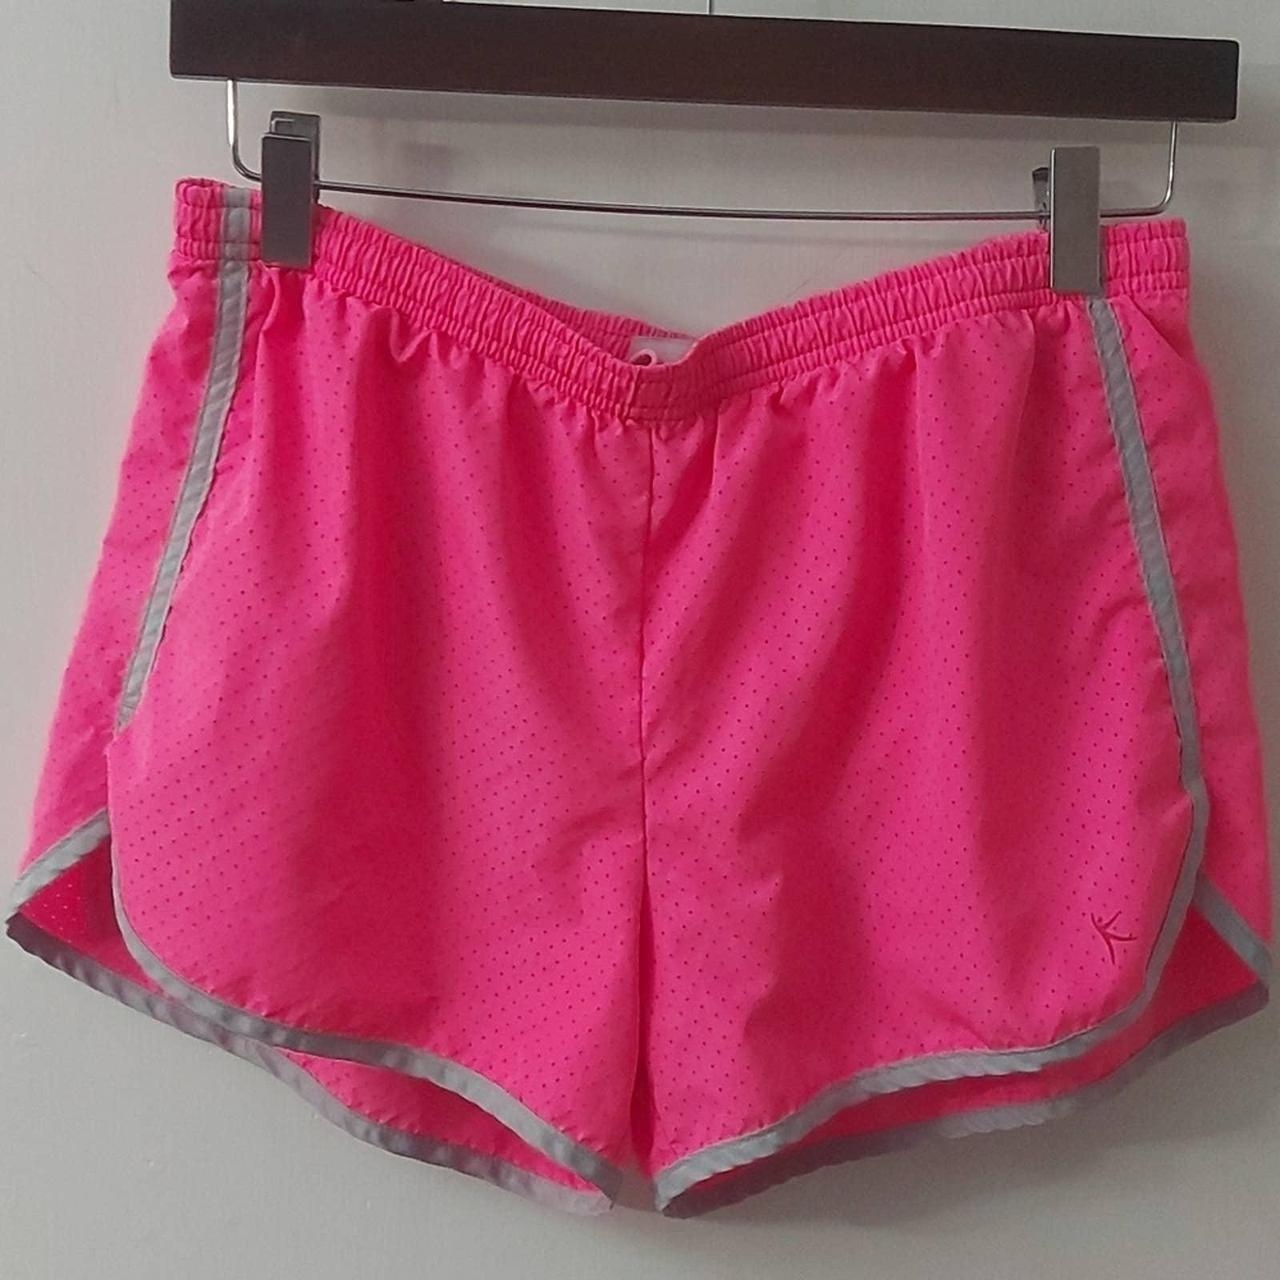 Danskin Now Pink Athletic Shorts